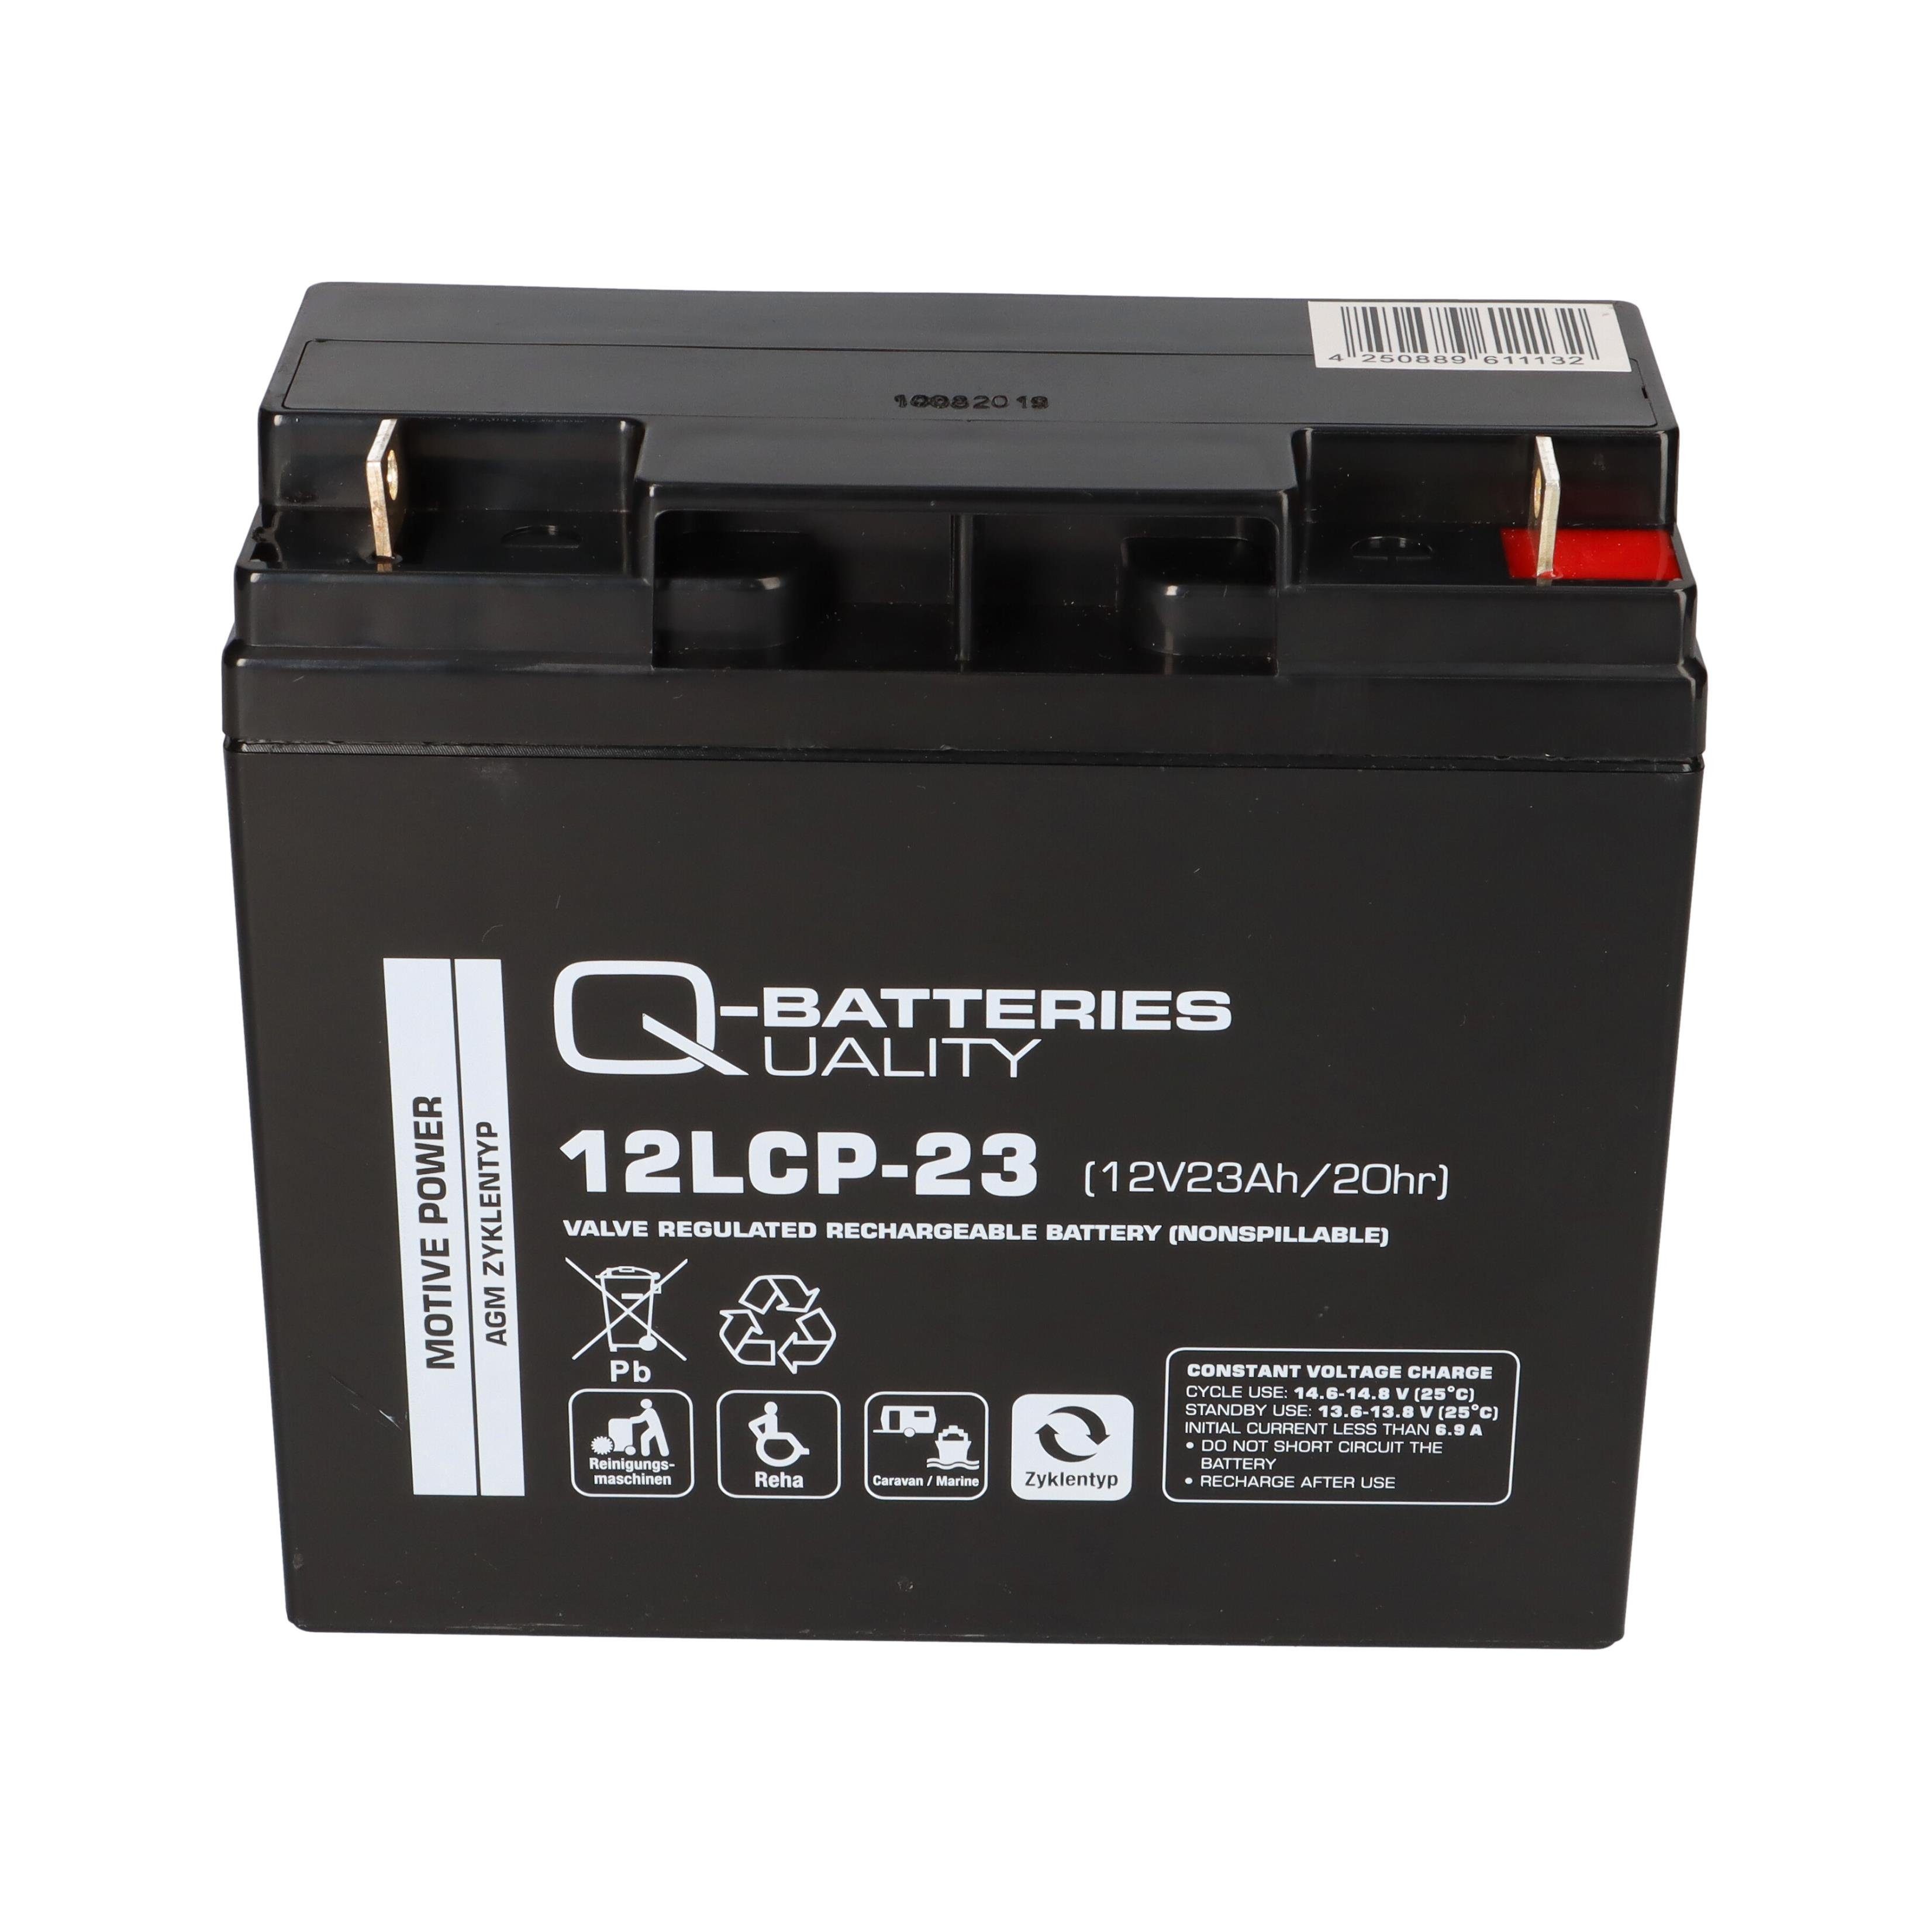 Q-Batteries Q-Batteries 12LCP-23 12V AGM Zyklentyp Deep Blei Bleiakkus Cycle - - 23Ah Akku 